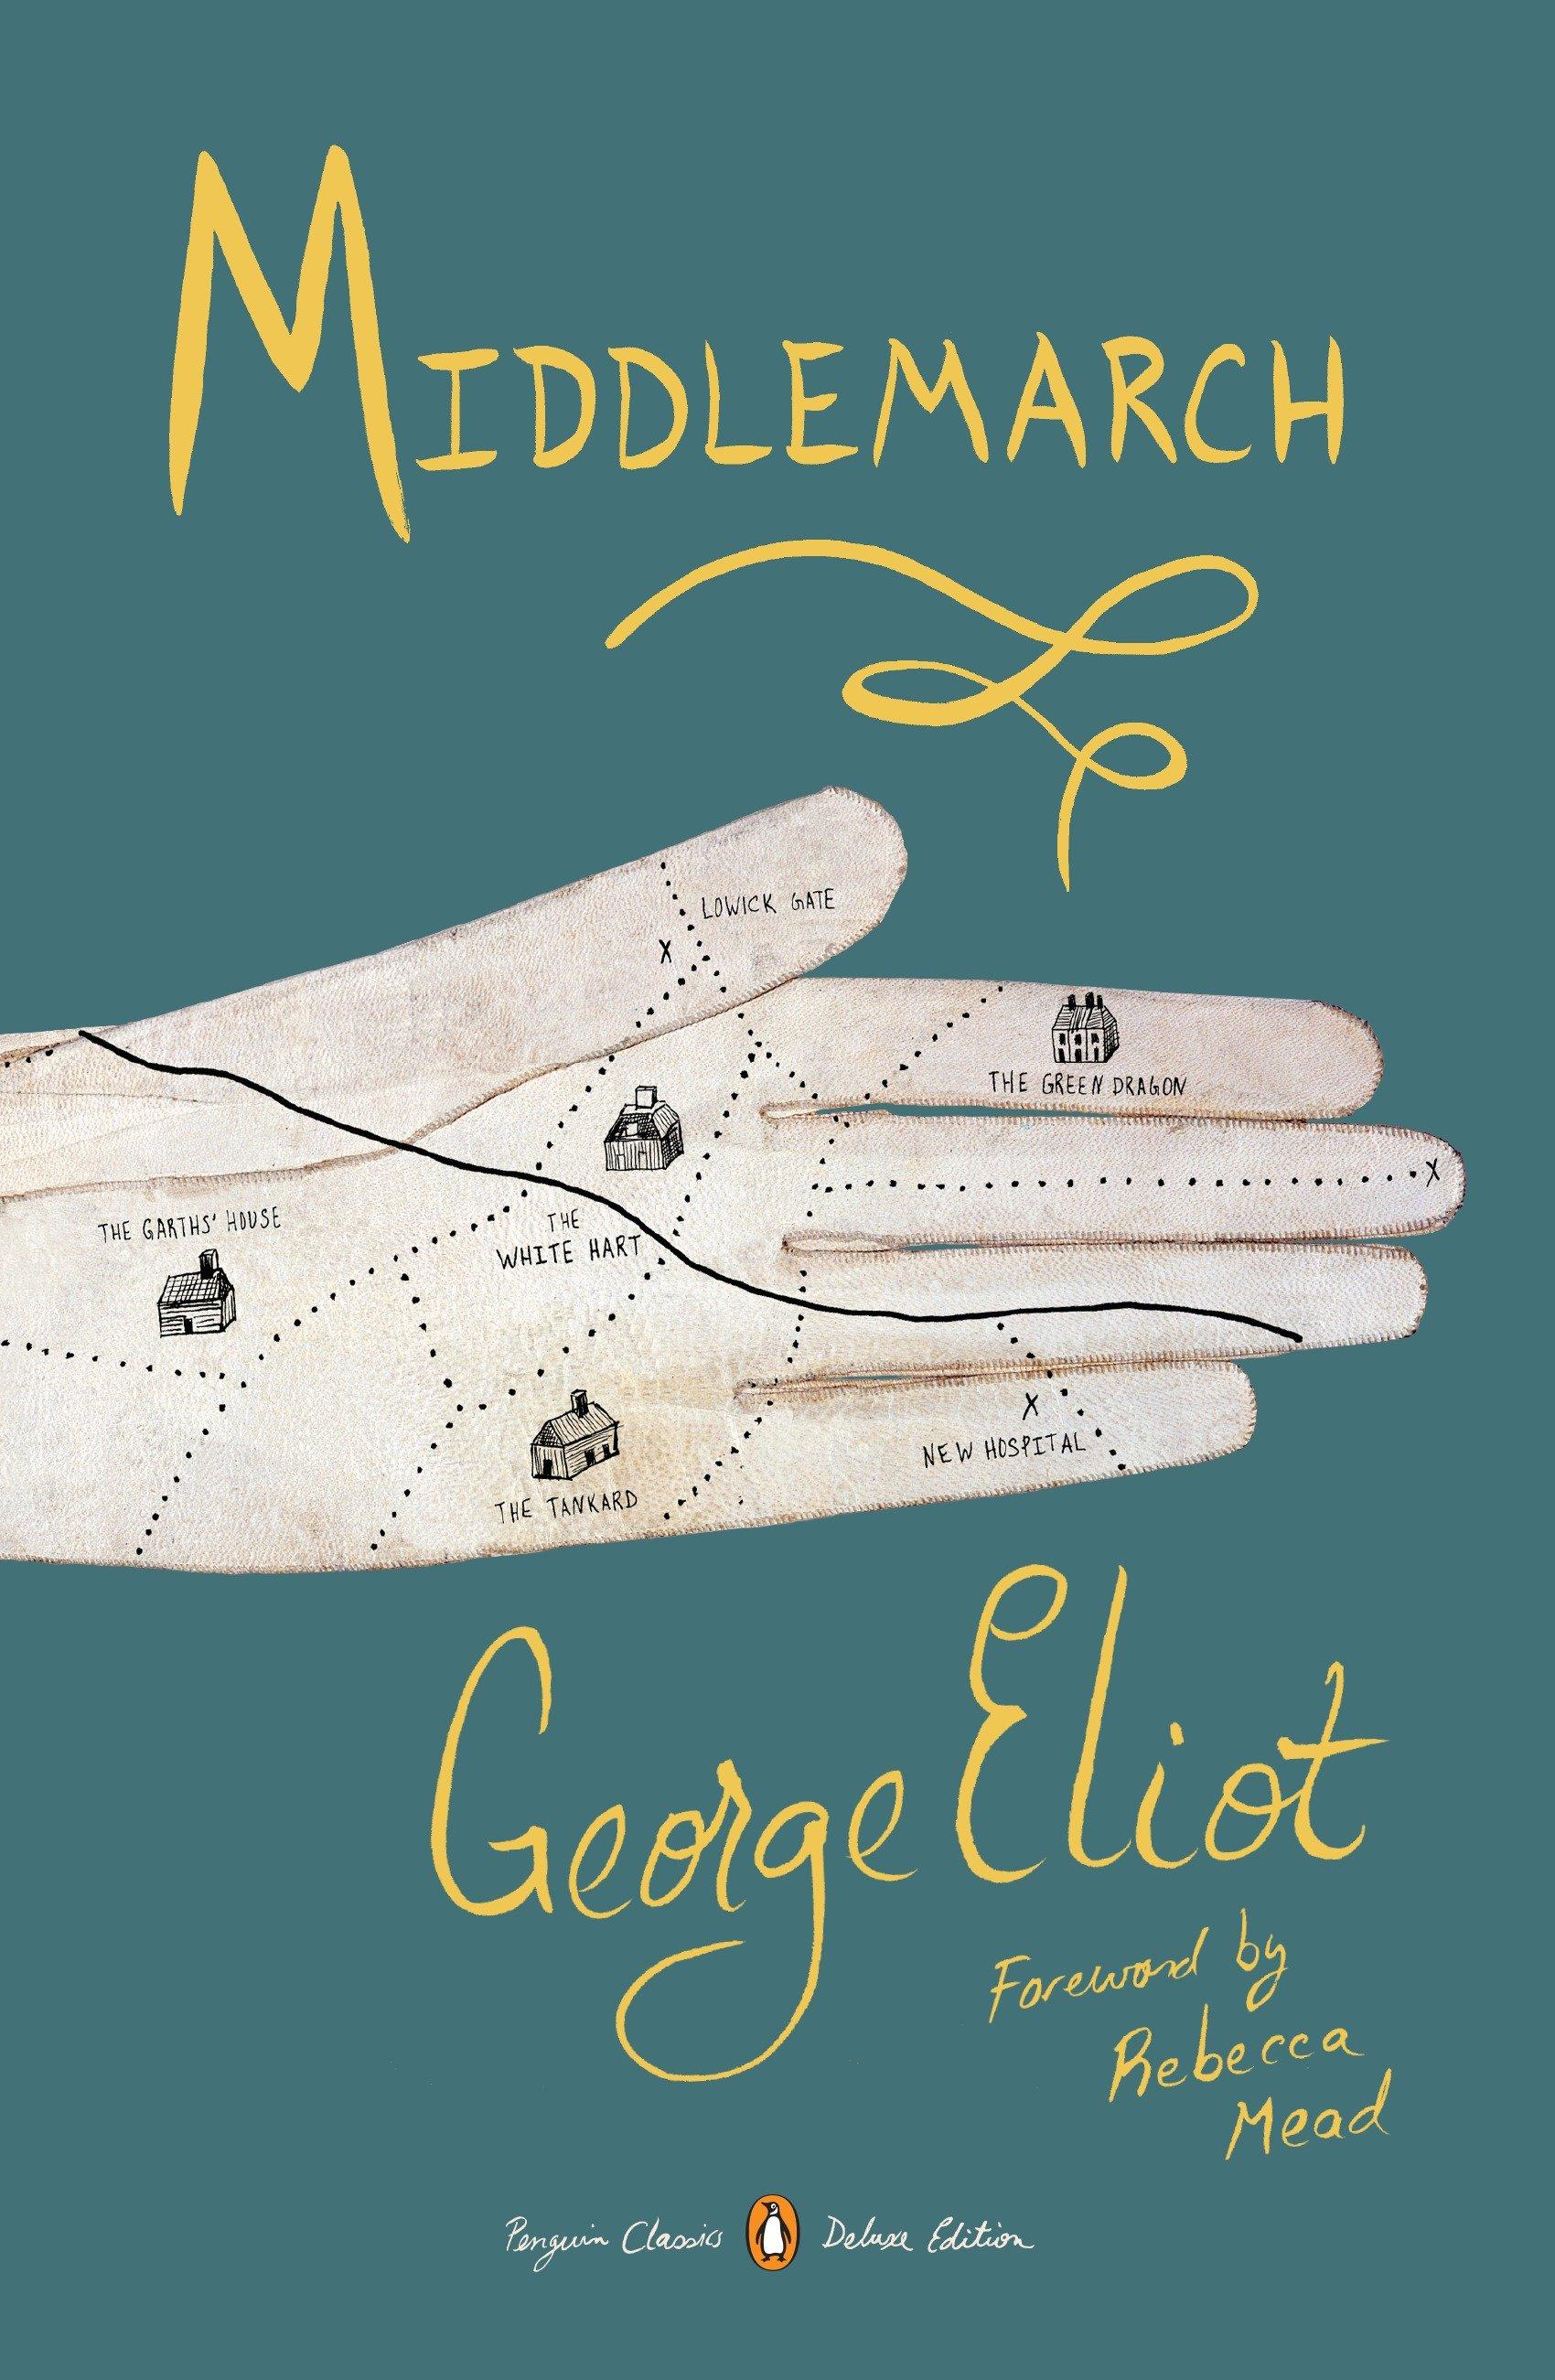 Middlemarch / (Penguin Classics Deluxe Edition) / George Eliot / Taschenbuch / Einband - flex.(Paperback) / Englisch / 2015 / Penguin Publishing Group / EAN 9780143107729 - Eliot, George